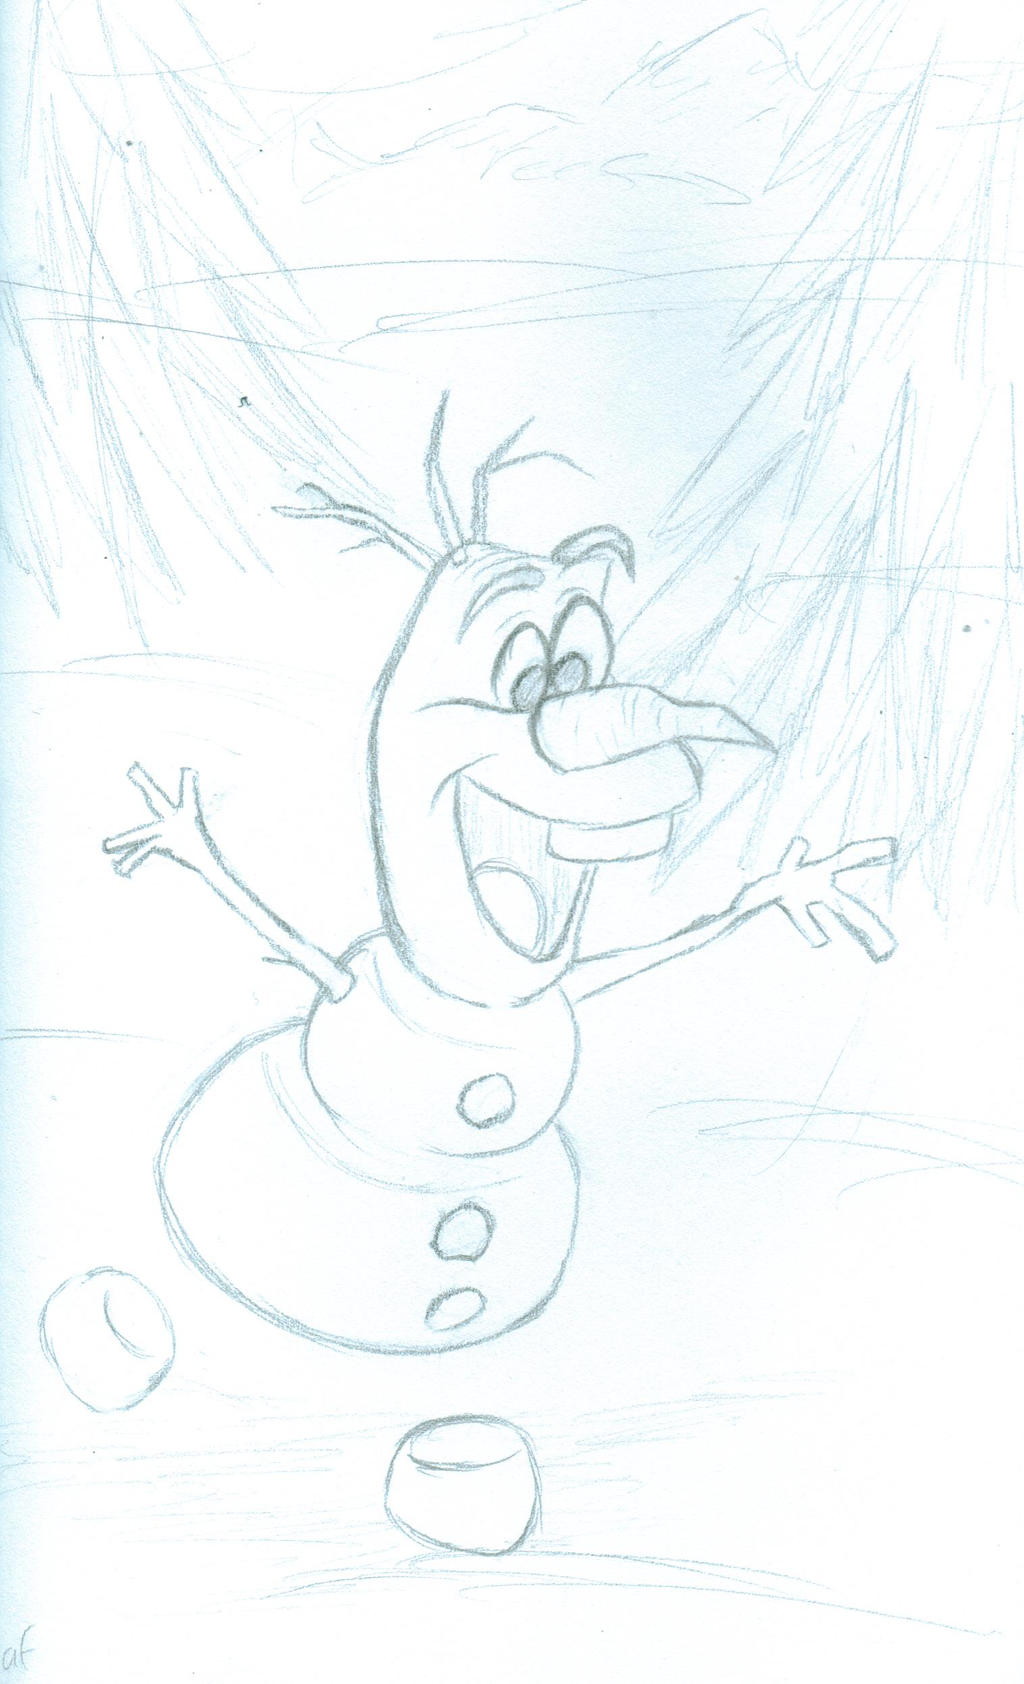 Olaf the Snowman Sketch by firegirl1995 on DeviantArt